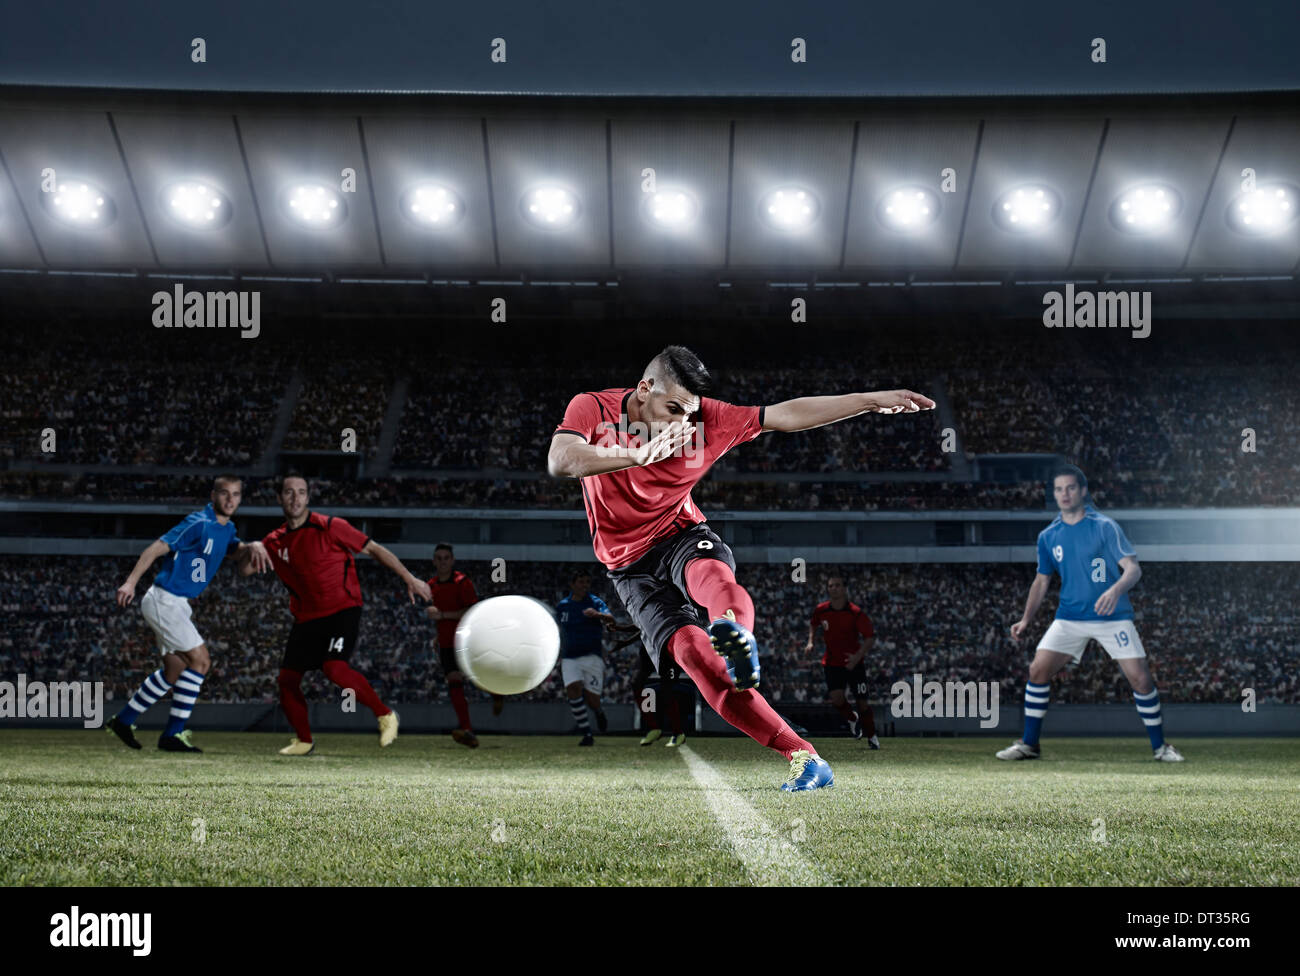 Fußball-Spieler treten Ball auf Feld Stockfoto